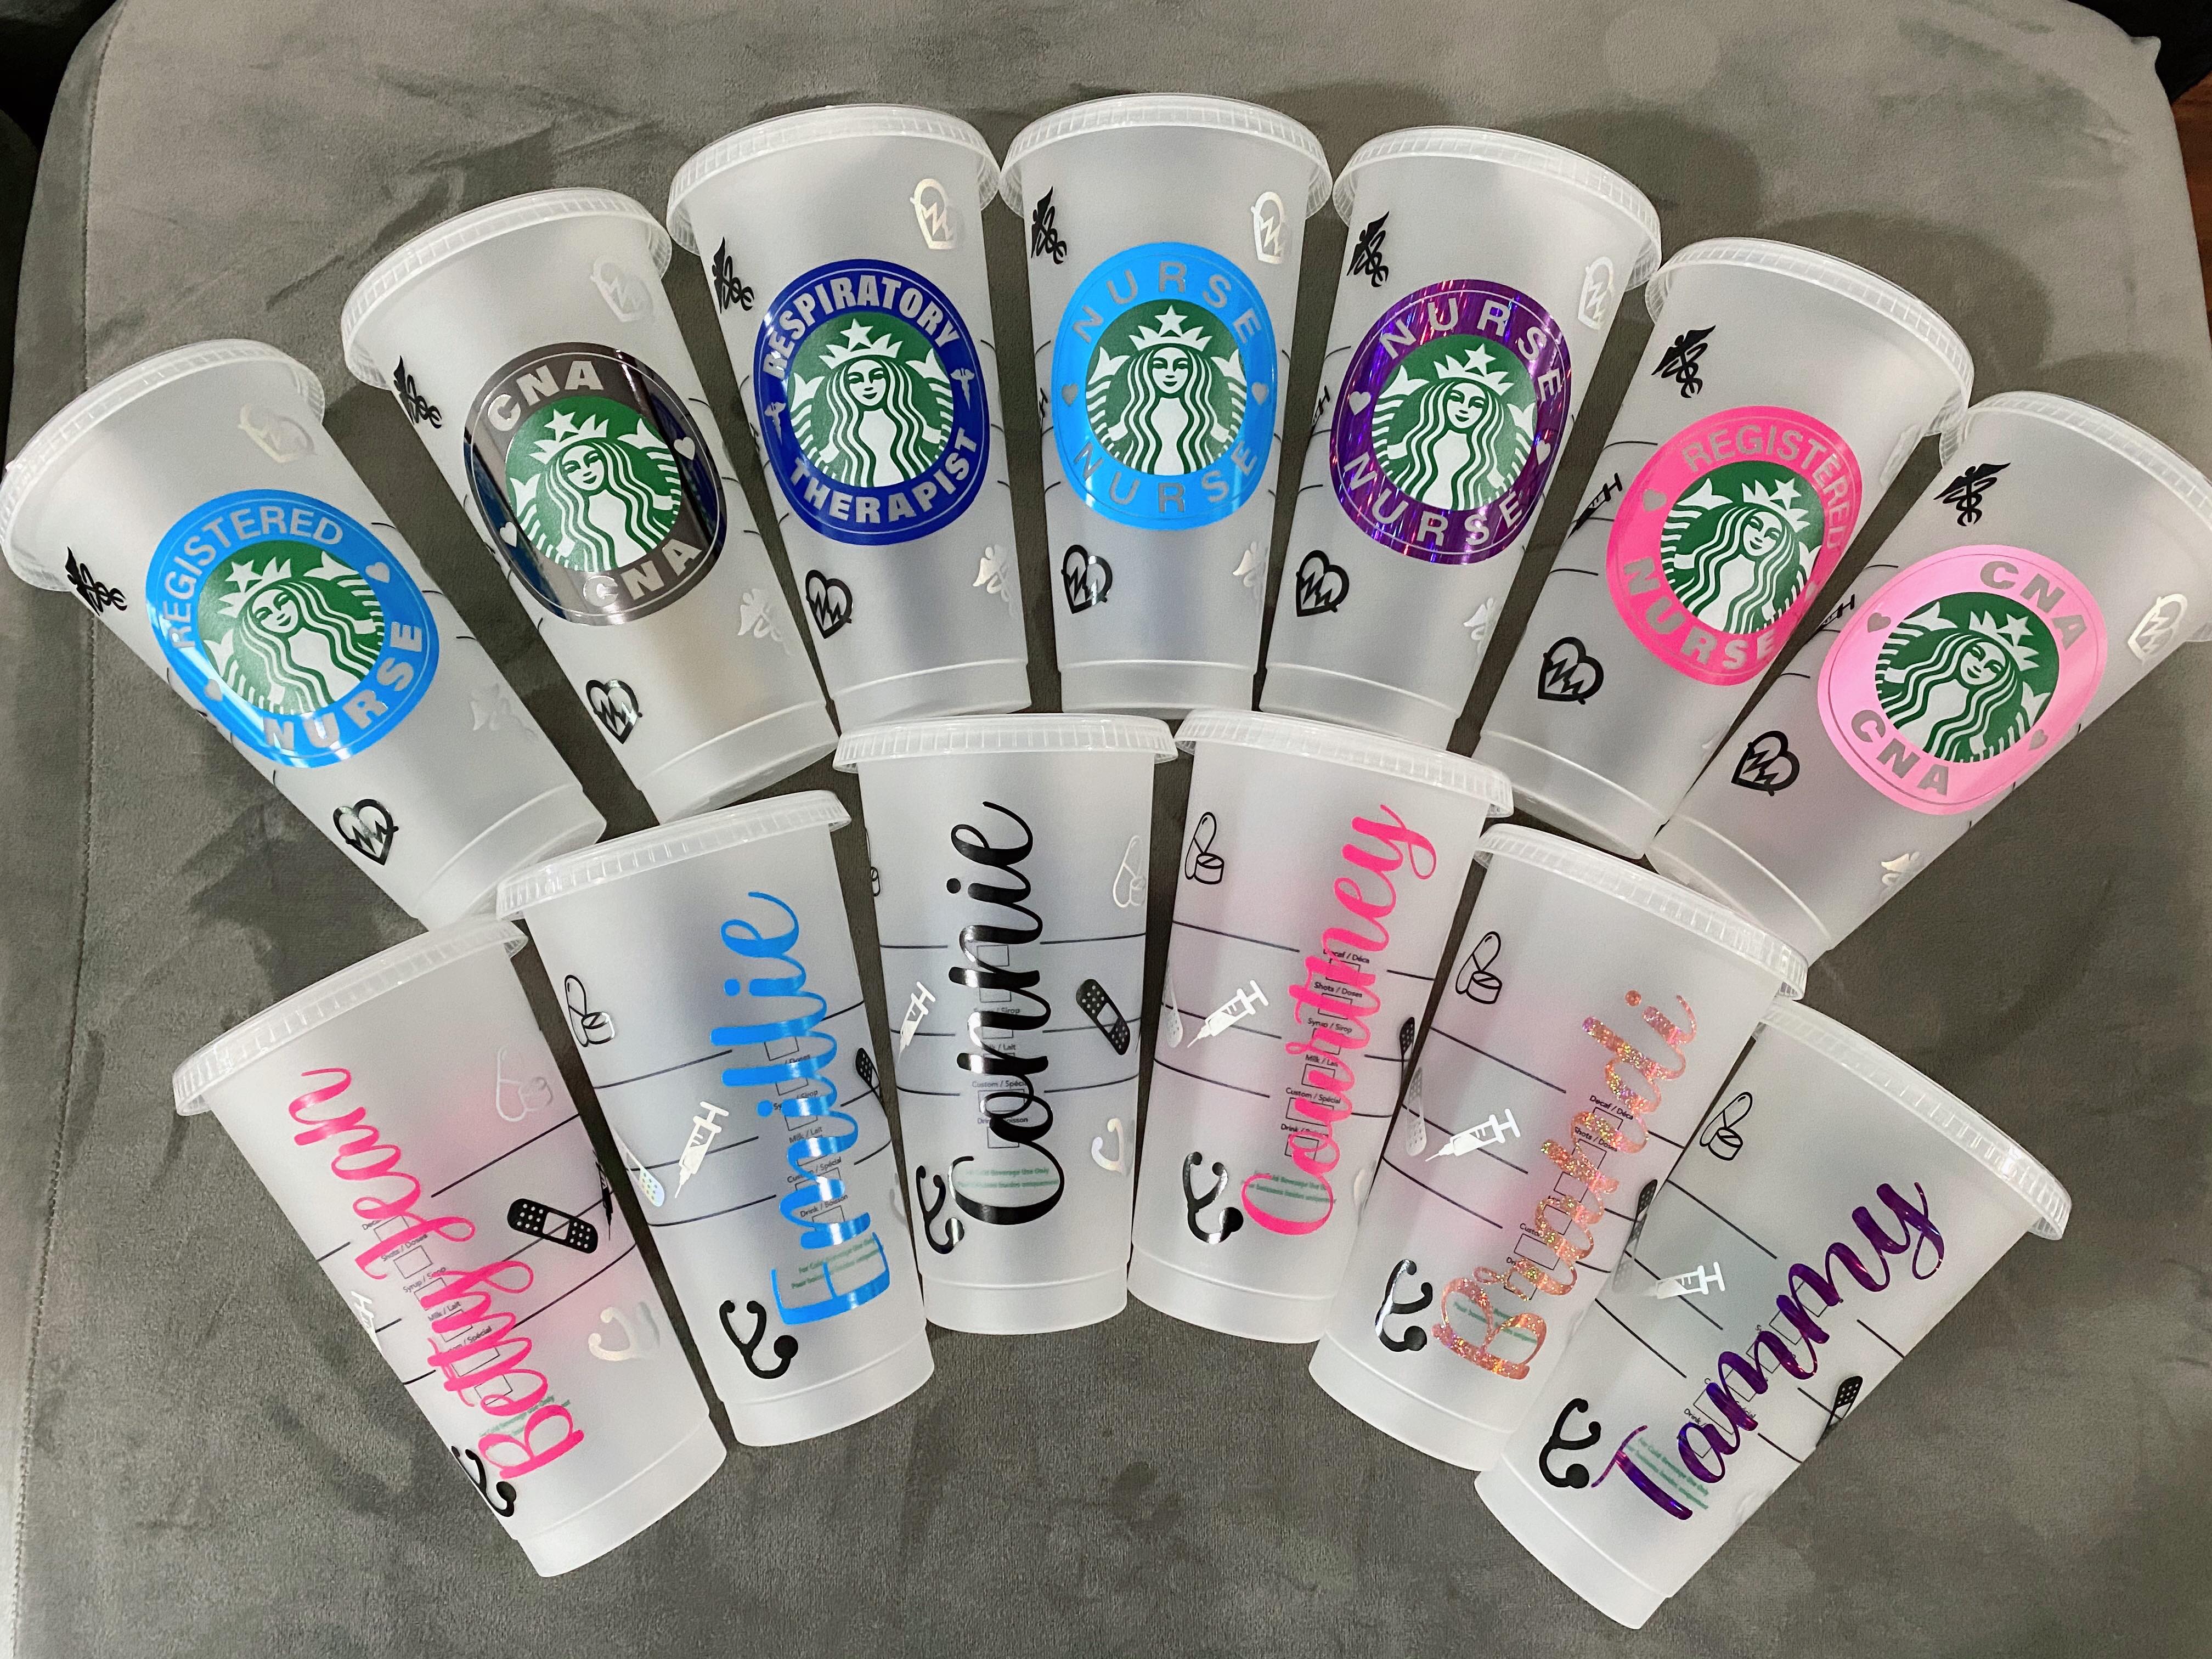 Customized Pharmacy Tech Starbucks Reusable Venti Cup - DecalCustom